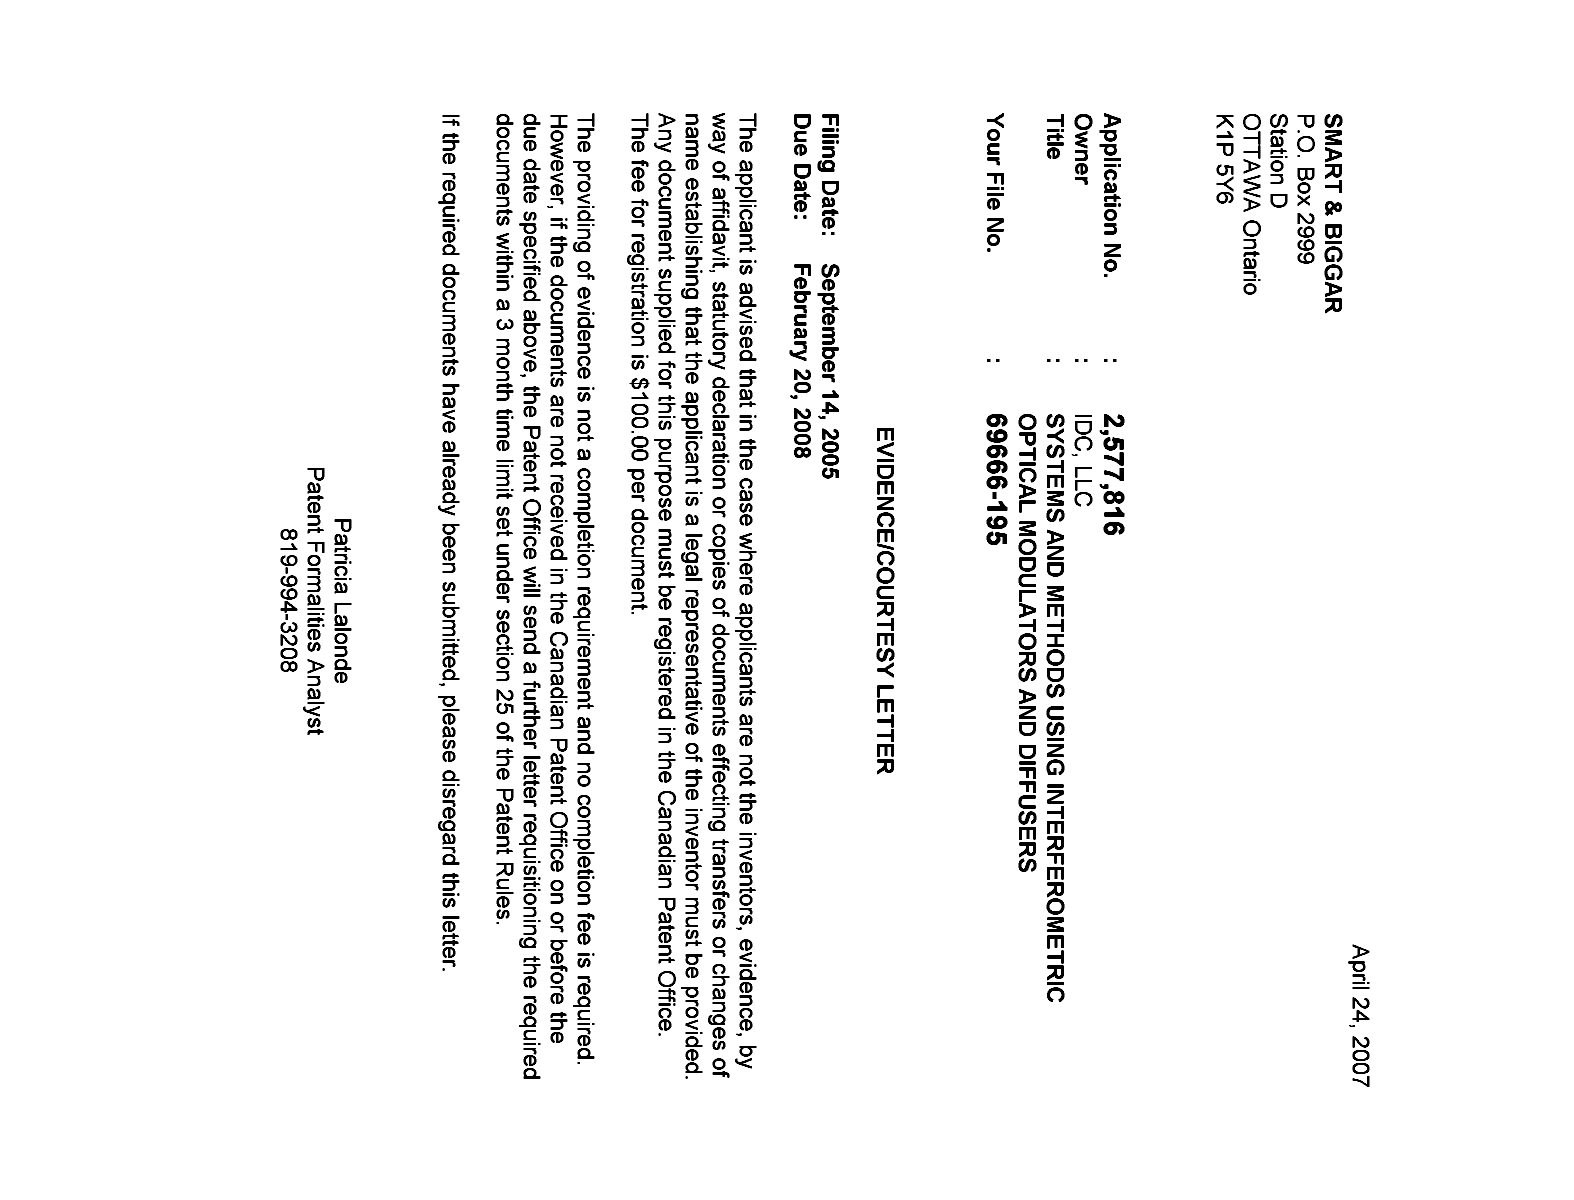 Canadian Patent Document 2577816. Correspondence 20061219. Image 1 of 1